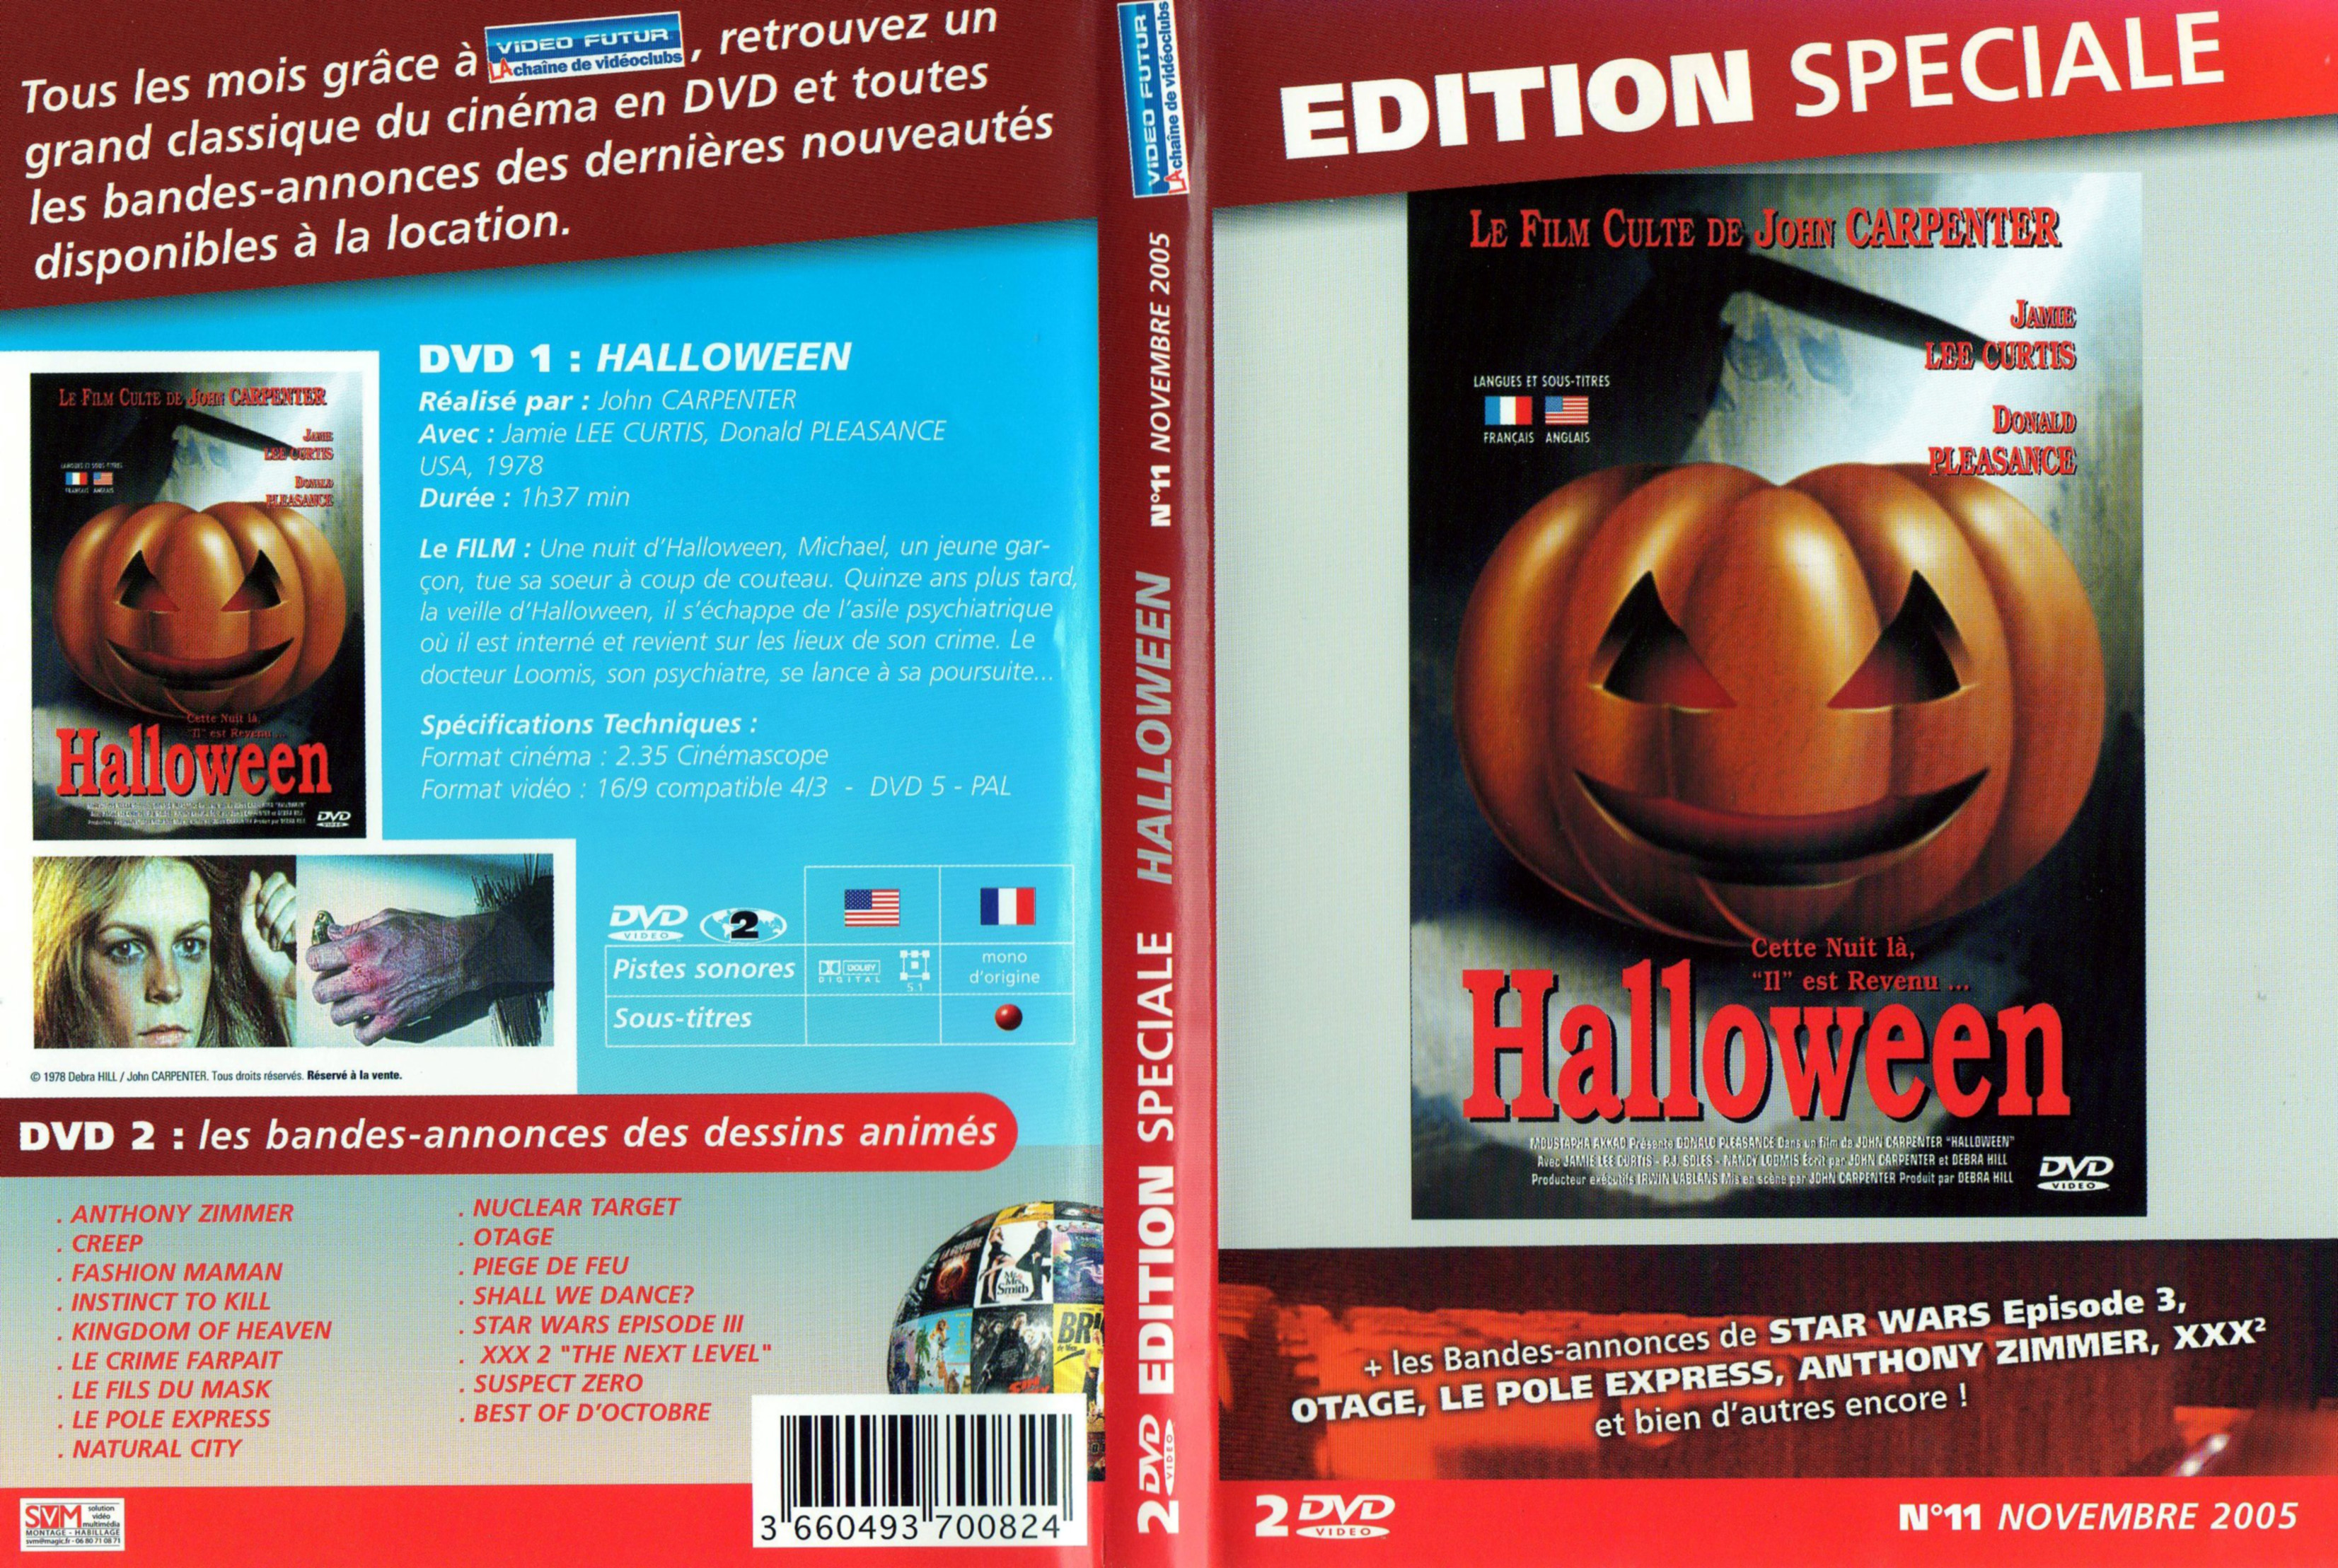 Jaquette DVD Halloween v4